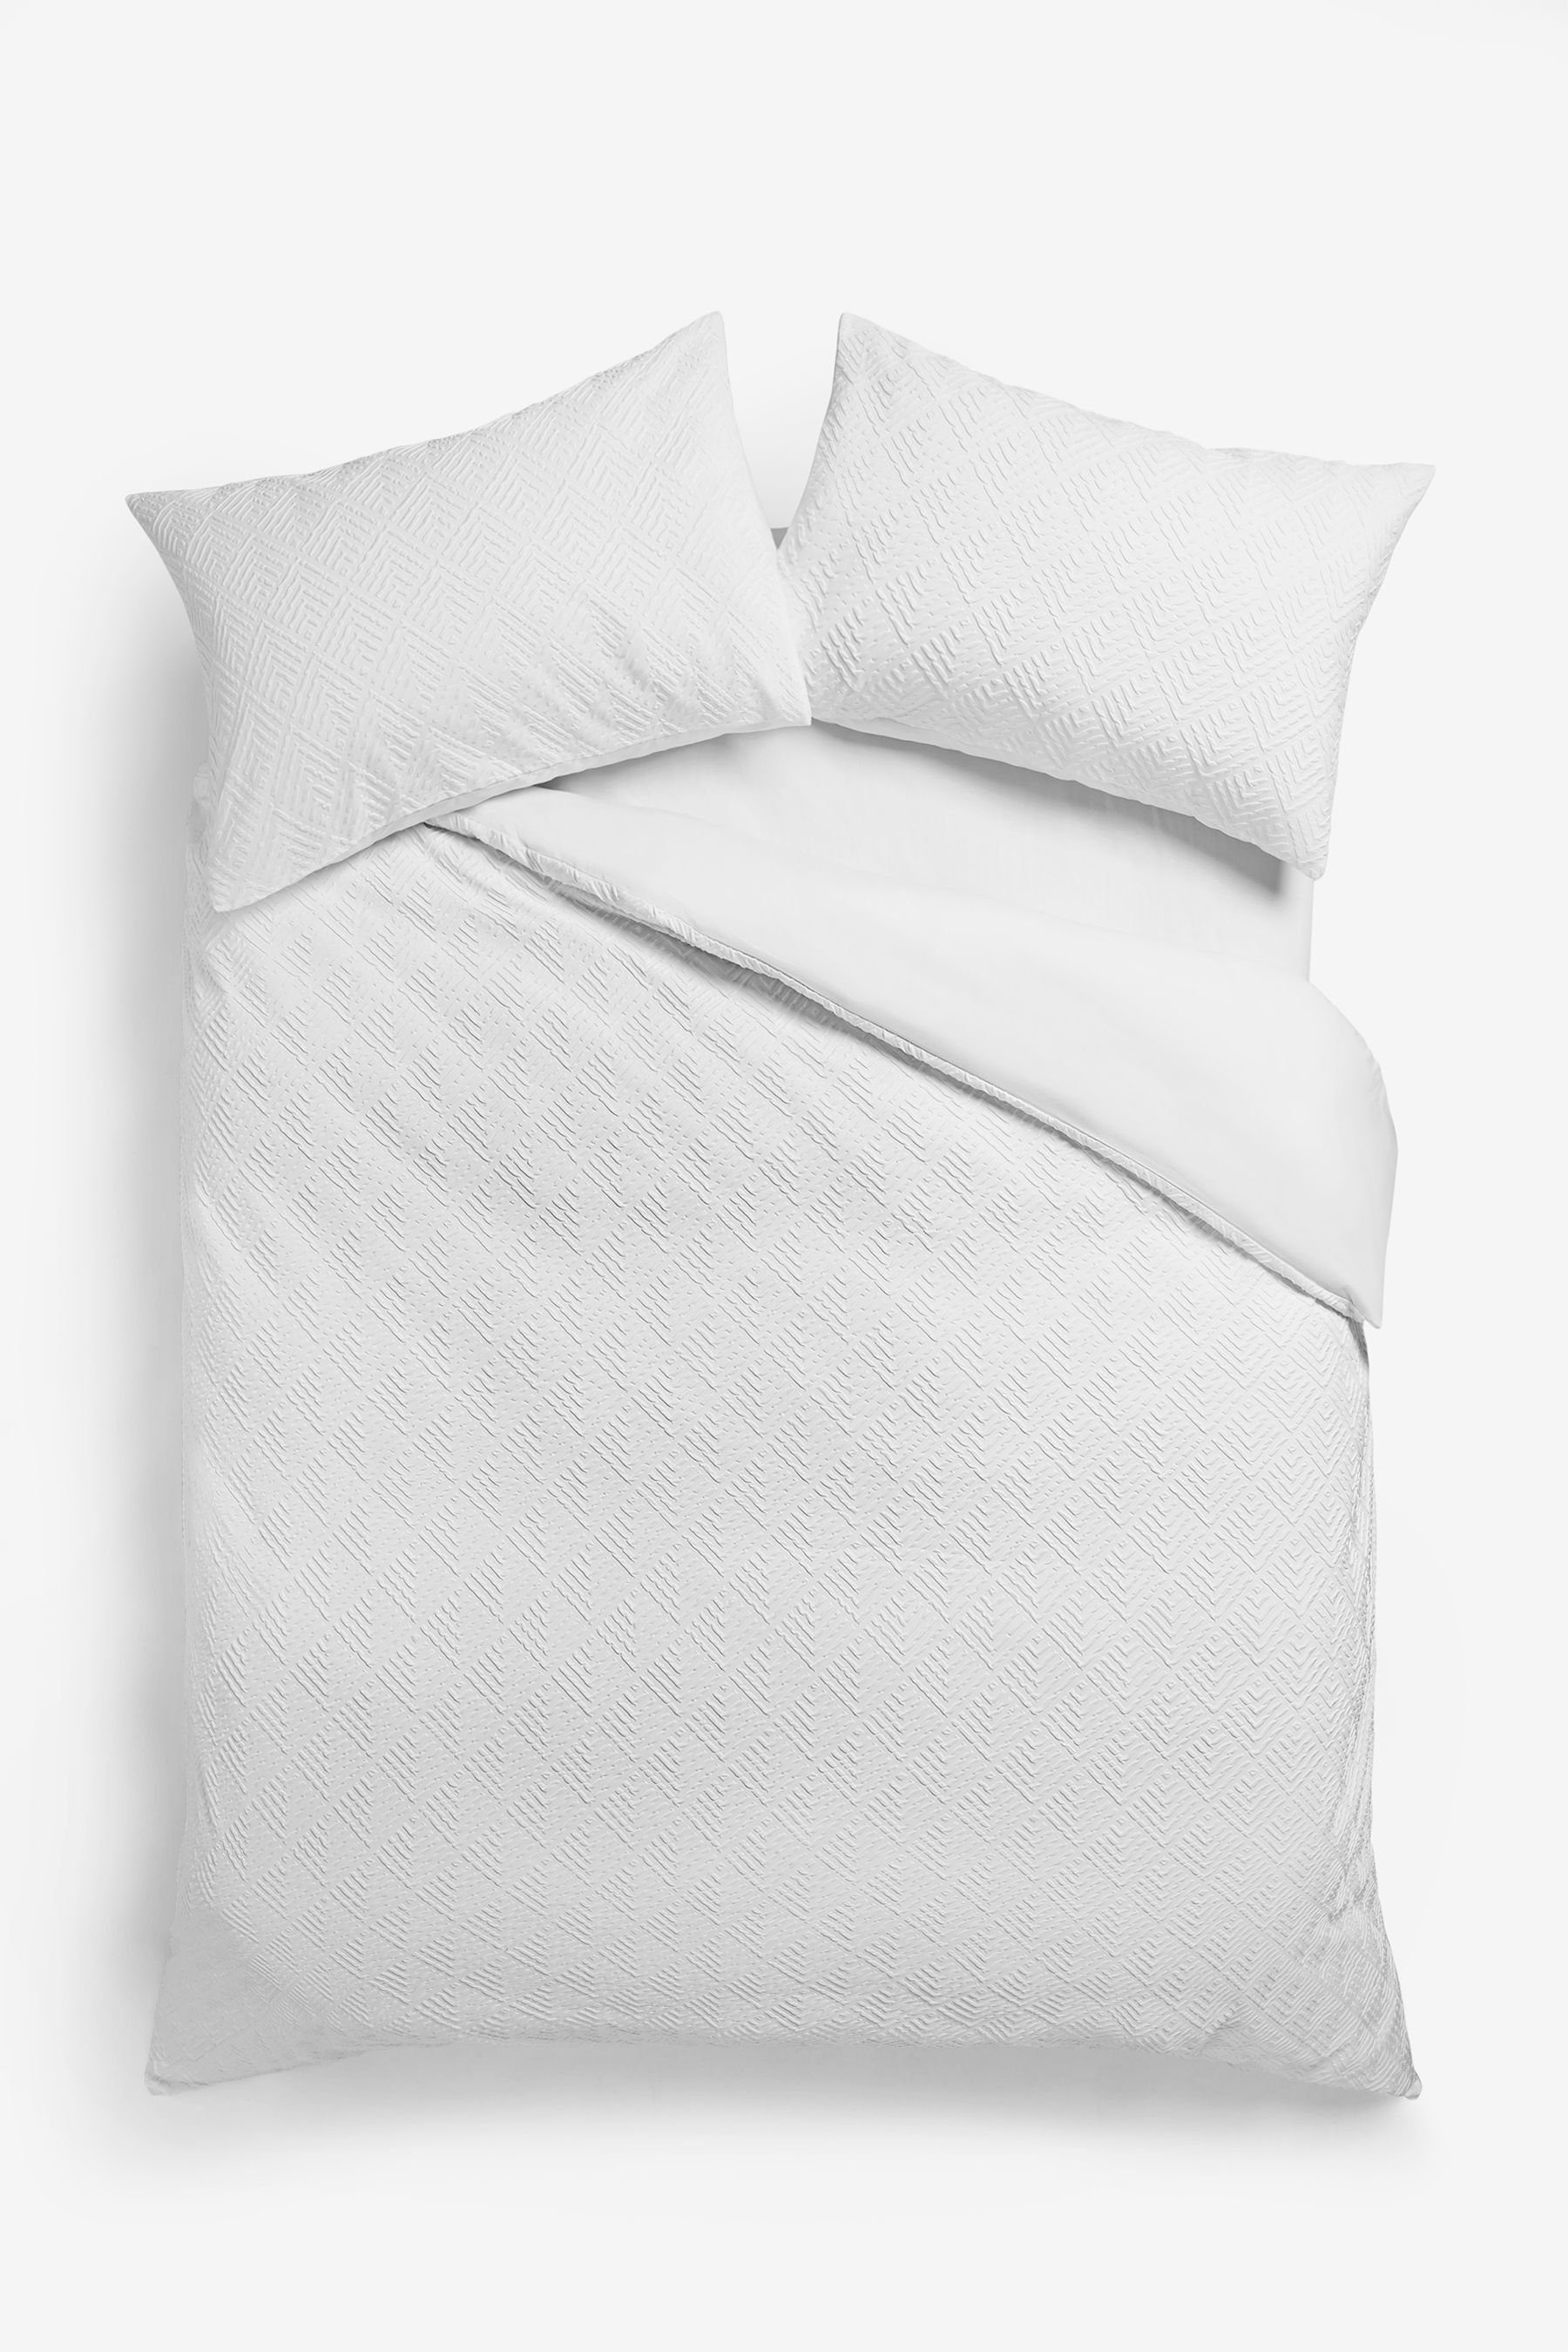 Bett-Set, Bettbezug und Kissenbezug mit Reliefmuster, Next, Bezug: Polyester (recycelt), Polyester